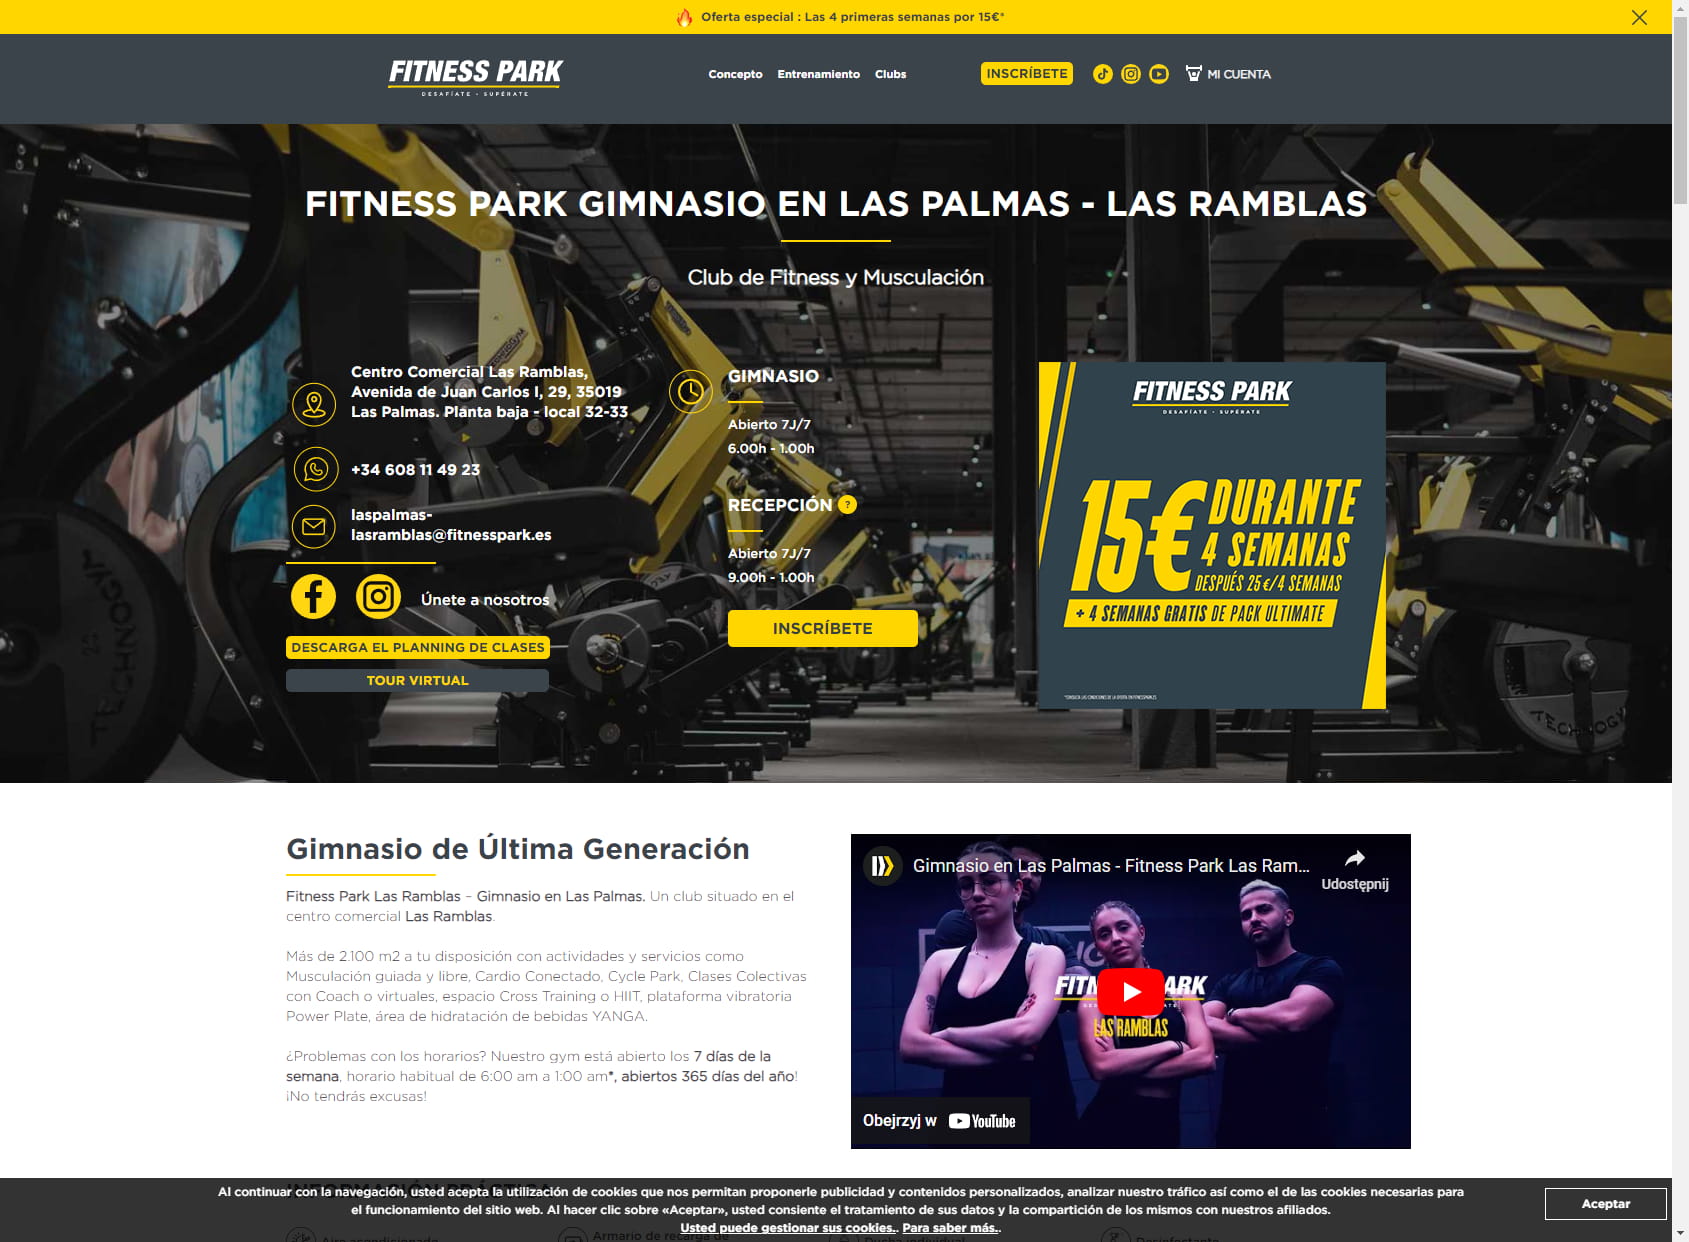 Fitness Park Las Palmas - Las Ramblas